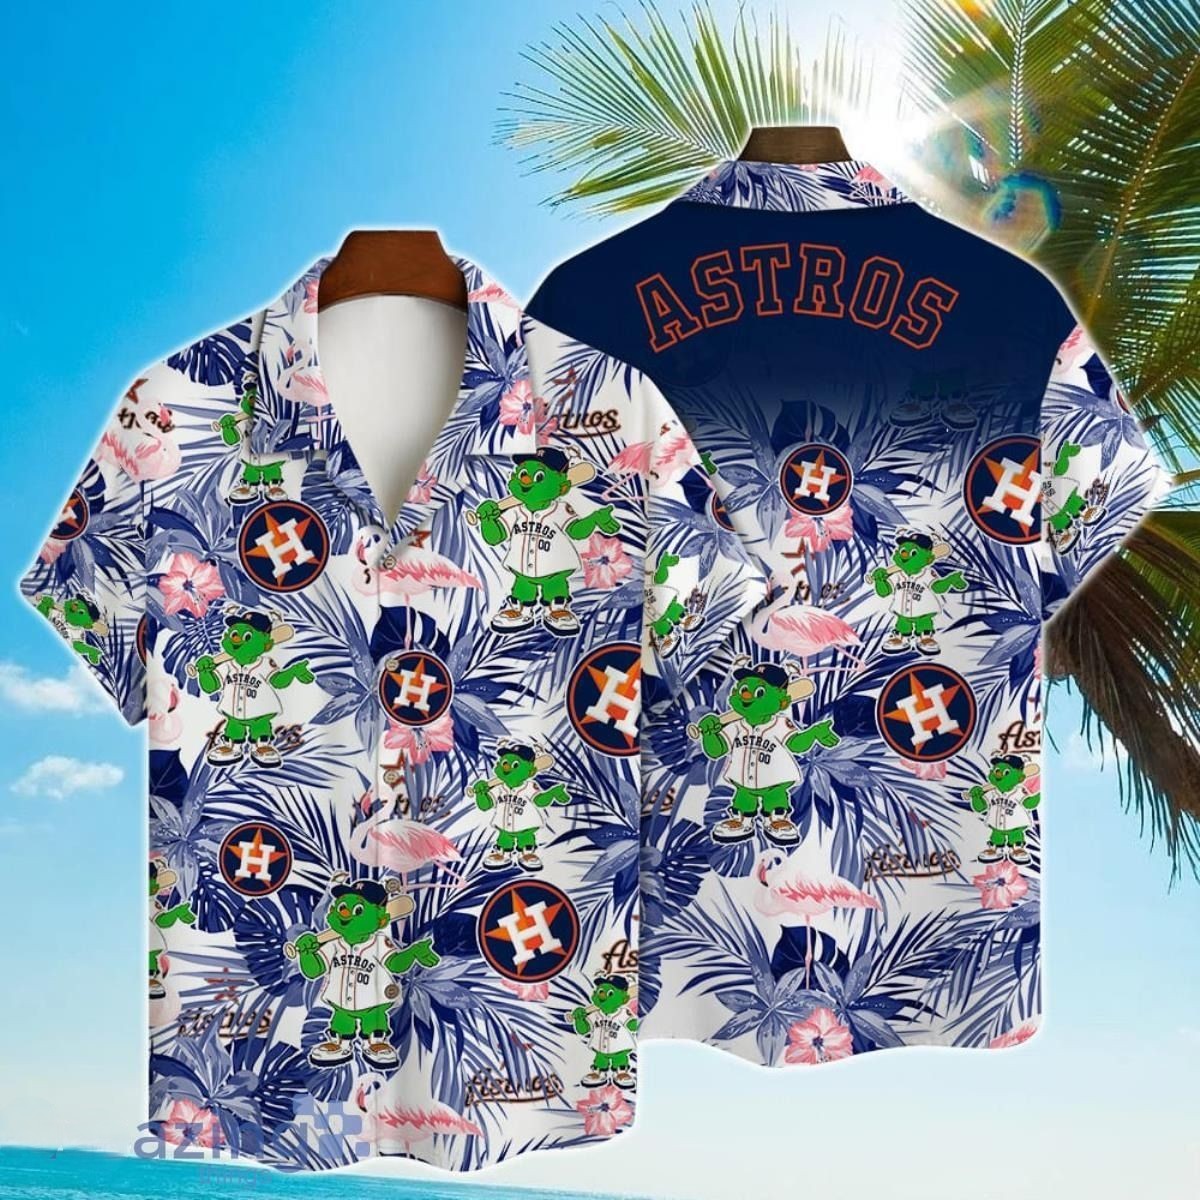 Chicago Cubs Major League Baseball Print Hawaiian Shirt For Men Women